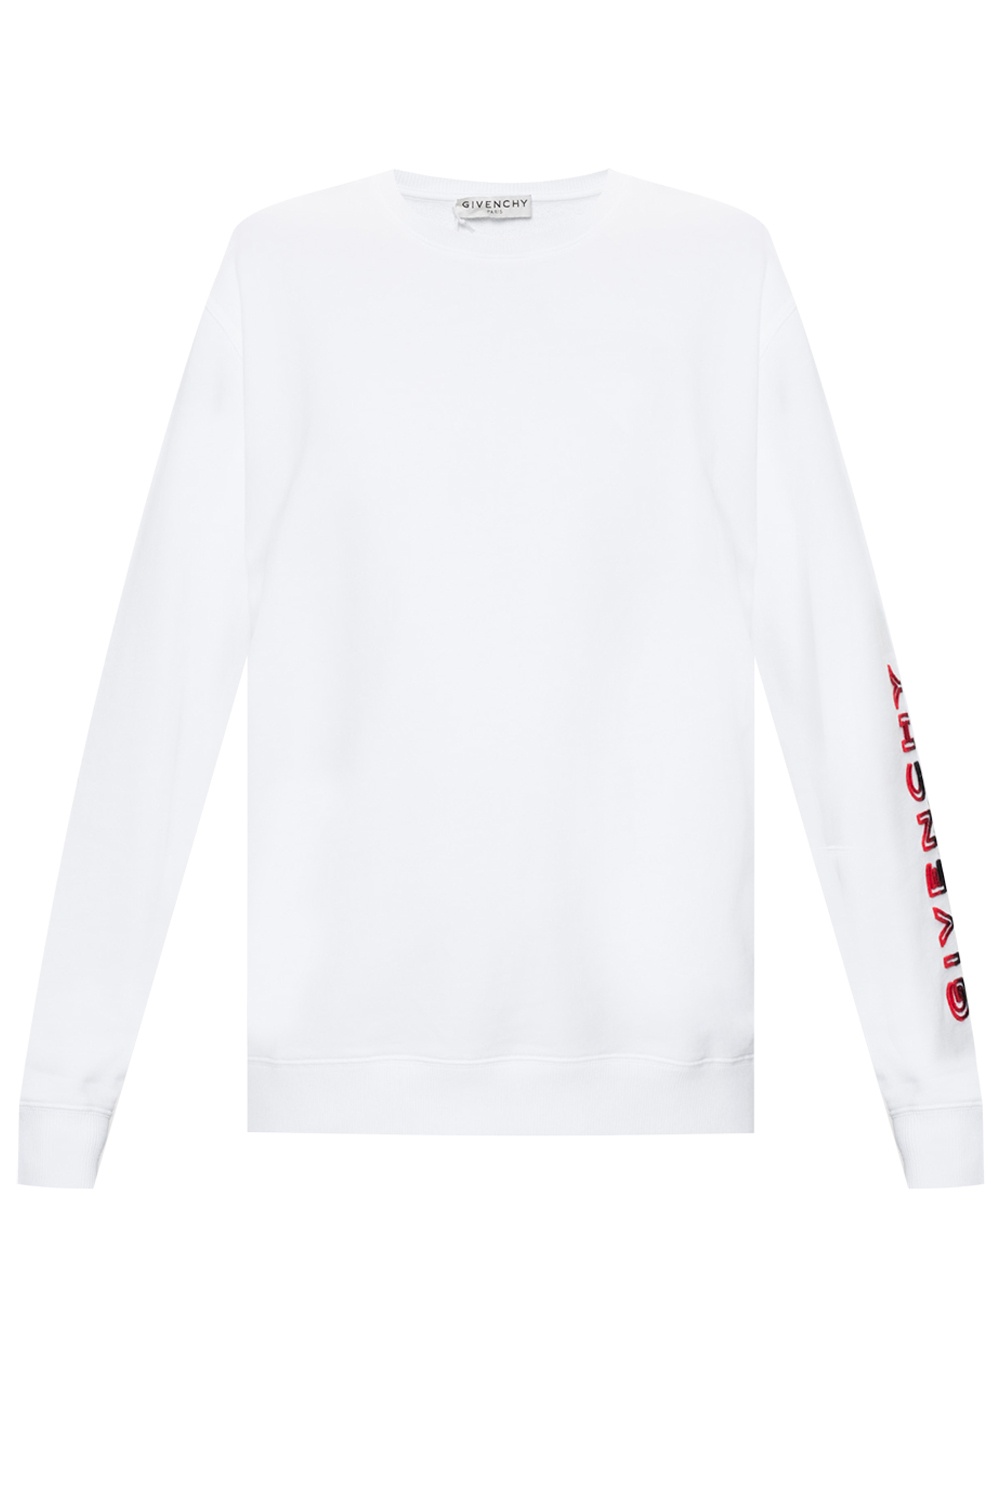 white givenchy sweatshirt